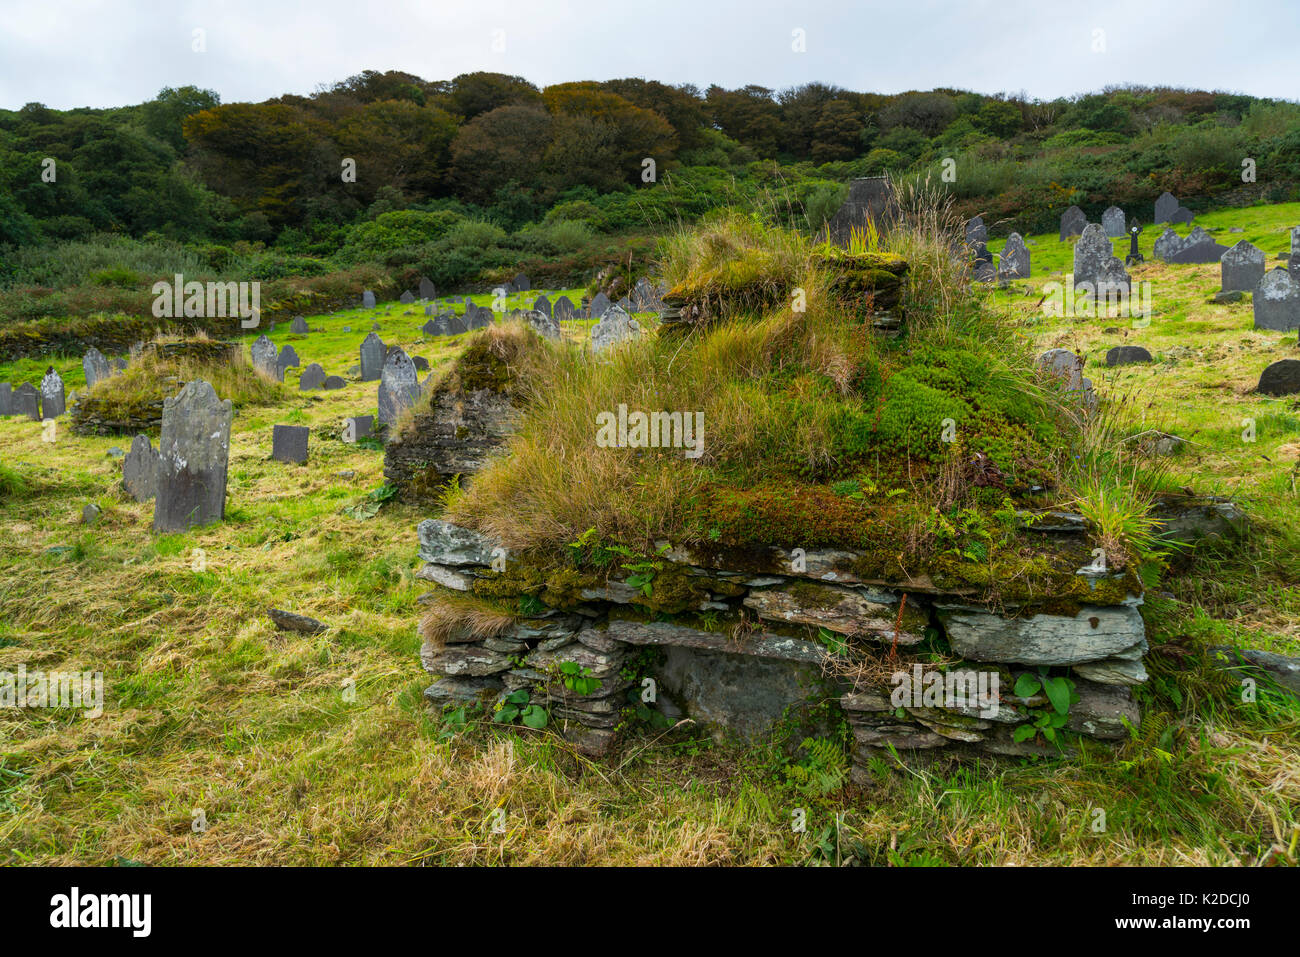 Knightstown Graveyard, Valentia Island, Iveragh Peninsula, County Kerry, Ireland, Europe. September 2015. Stock Photo